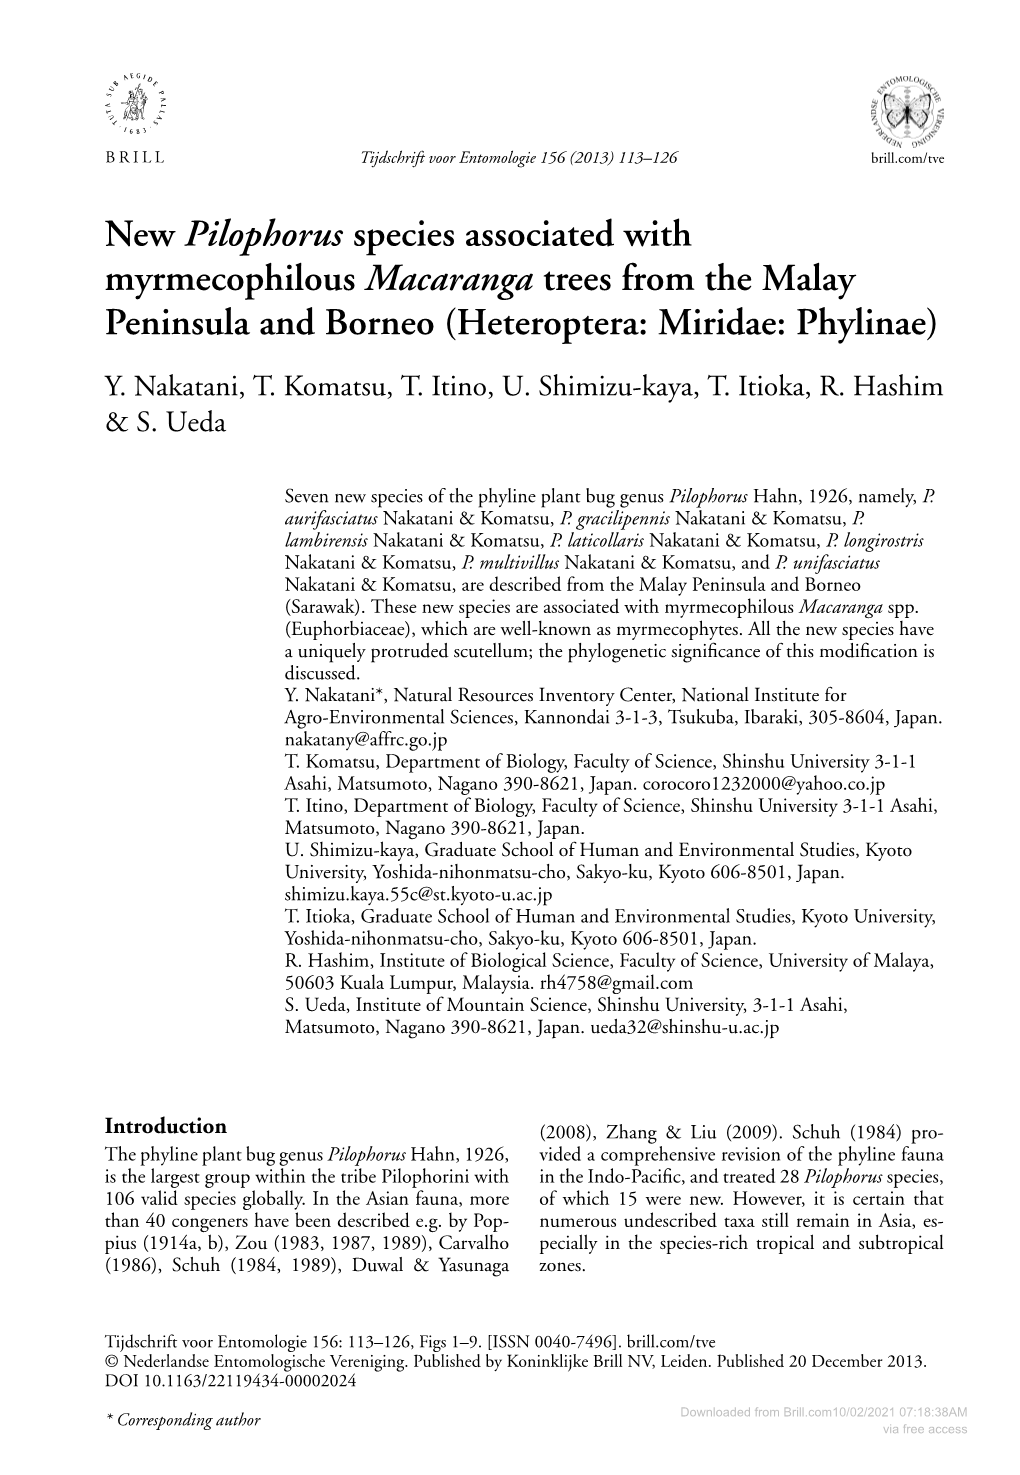 New Pilophorus Species Associated with Myrmecophilous Macaranga Trees from the Malay Peninsula and Borneo (Heteroptera: Miridae: Phylinae) Y